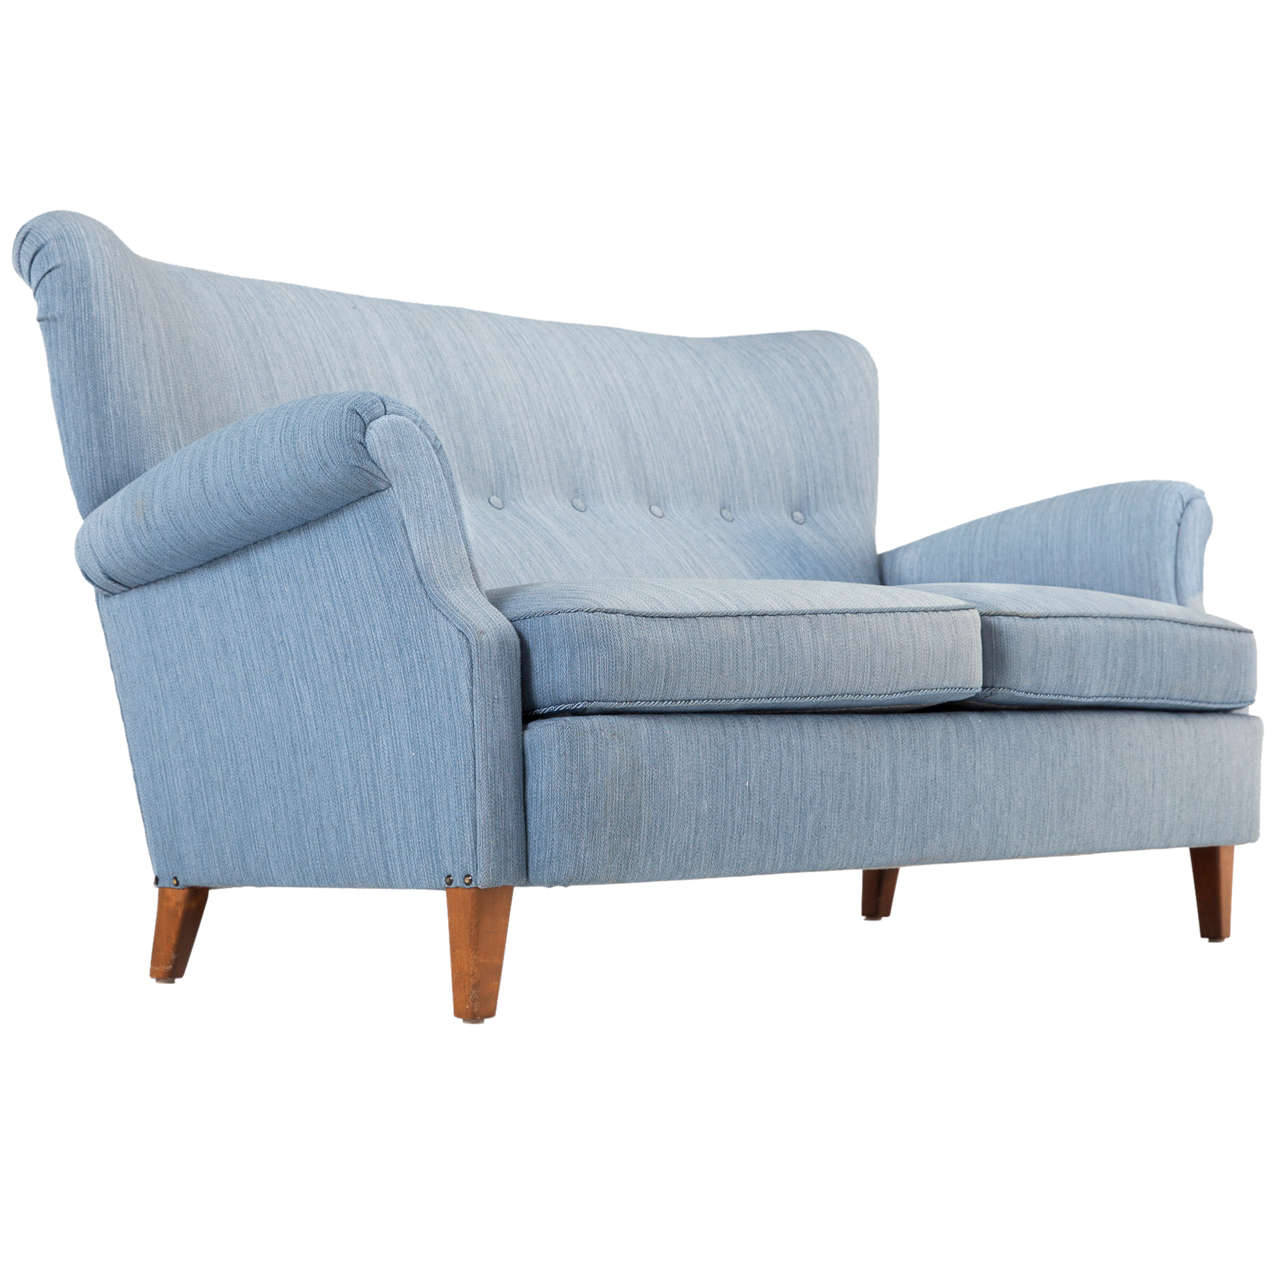 Swedish Blue Two-Seat Sofa, 1950s